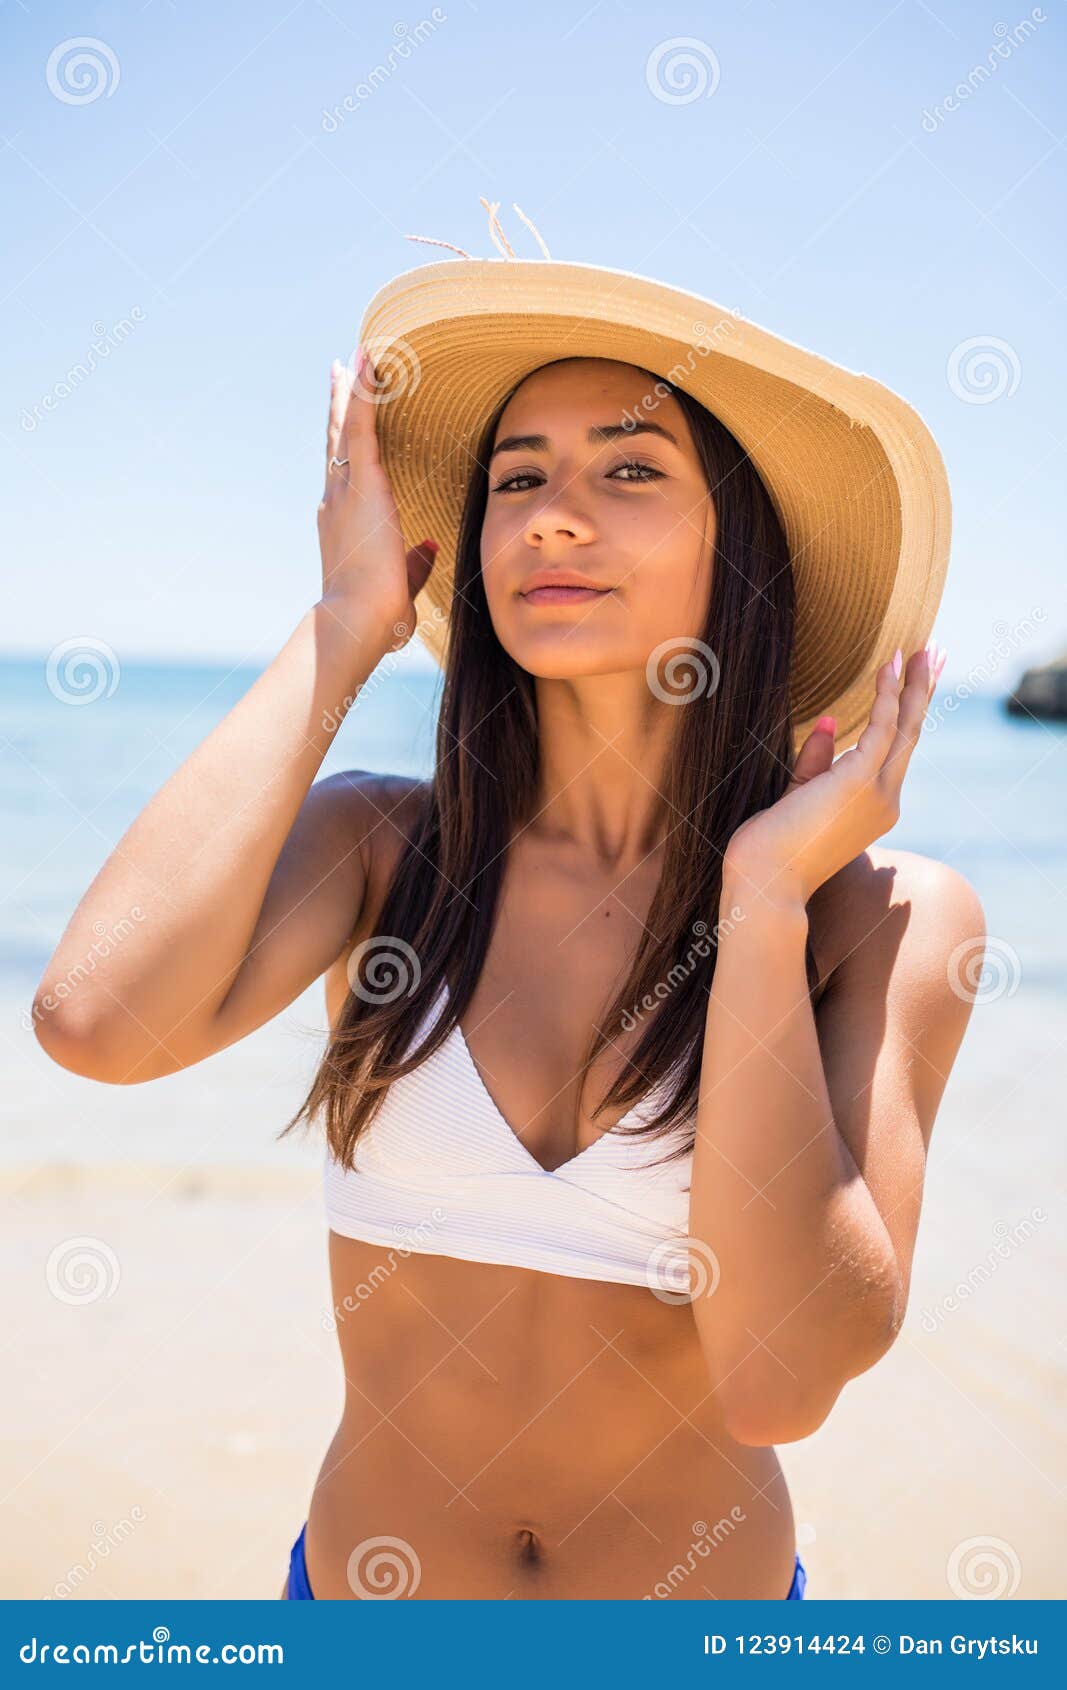 https://thumbs.dreamstime.com/z/portrait-woman-white-blue-bikini-tropical-beach-looking-camera-beautiful-latin-girl-swimwear-straw-hat-copy-123914424.jpg